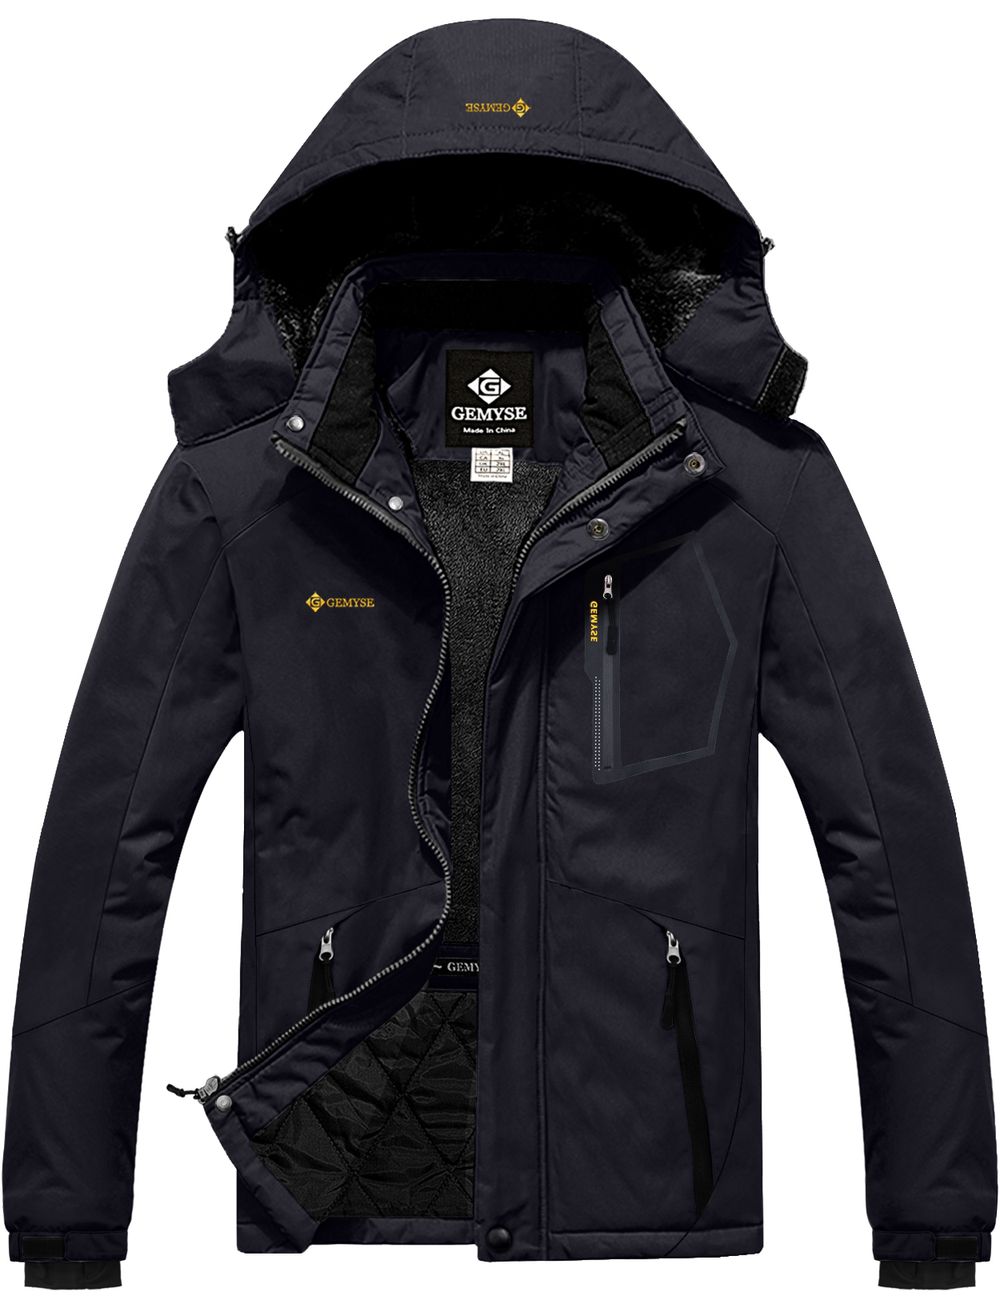 8FANS & GEMYSE Co-branded Men's Waterproof & Windproof Classic Style Winter Snow Jacket